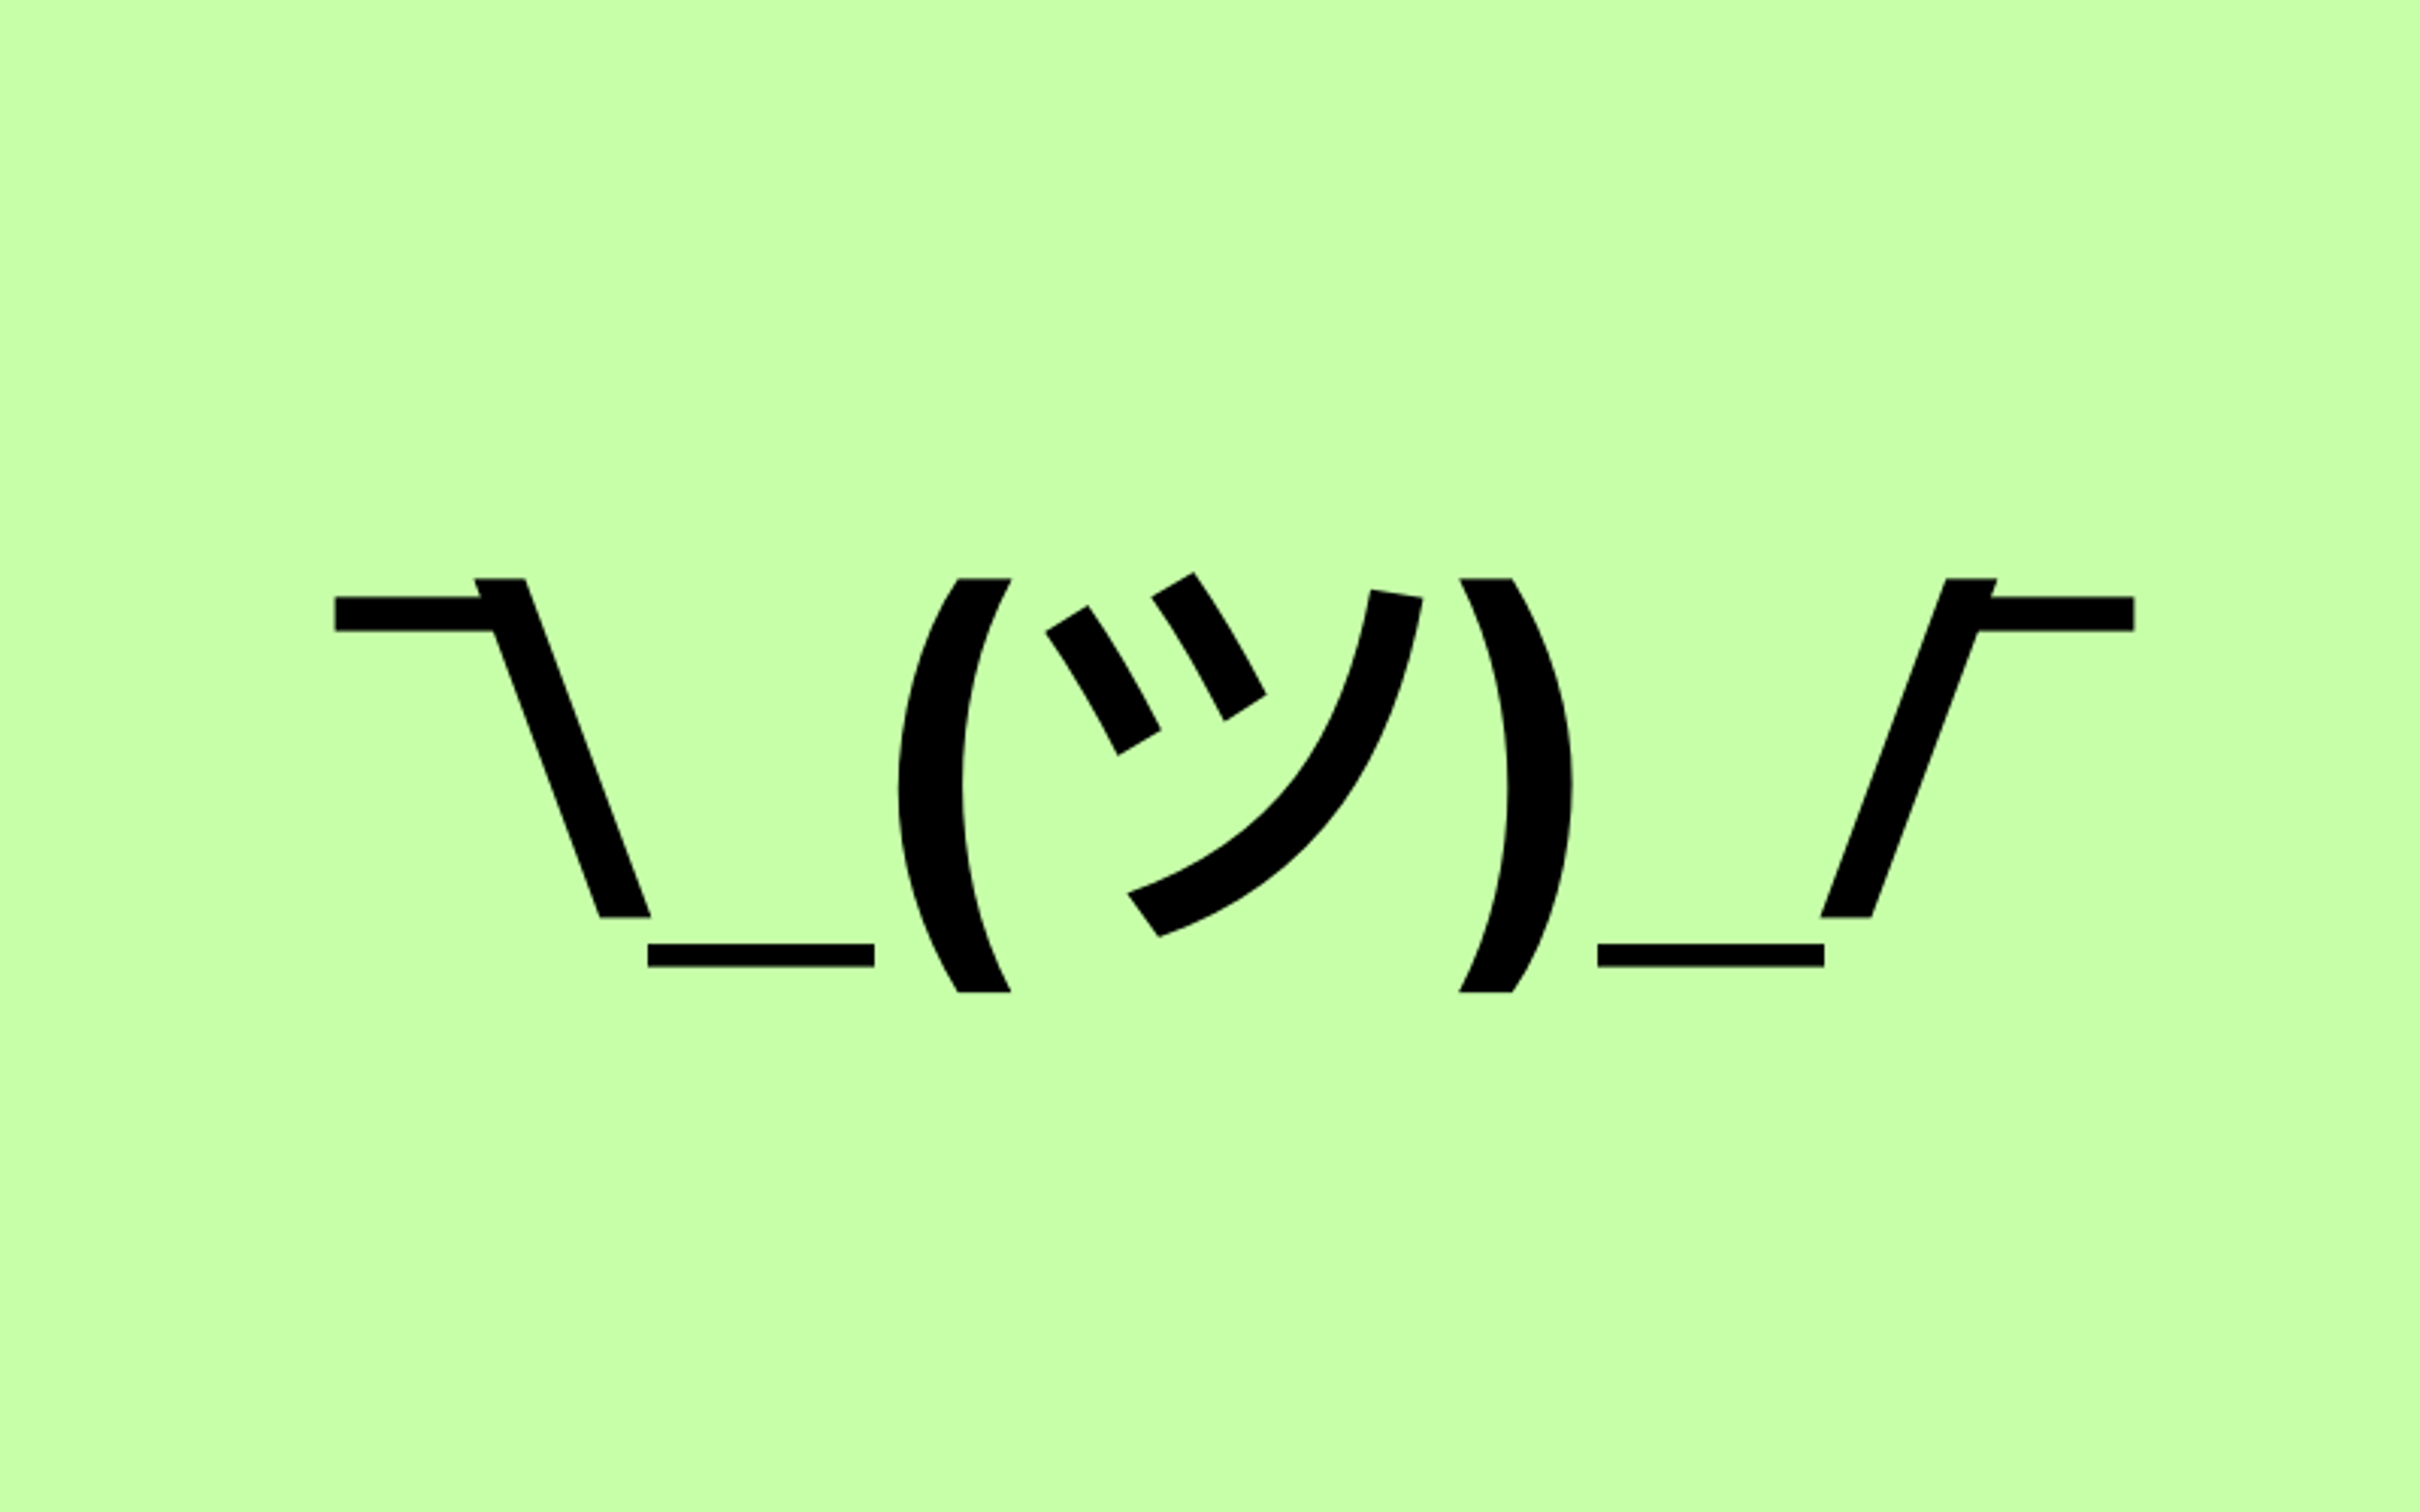 How to Type the Shrug Emoji ¯\_(ツ)_/¯ on Every Device